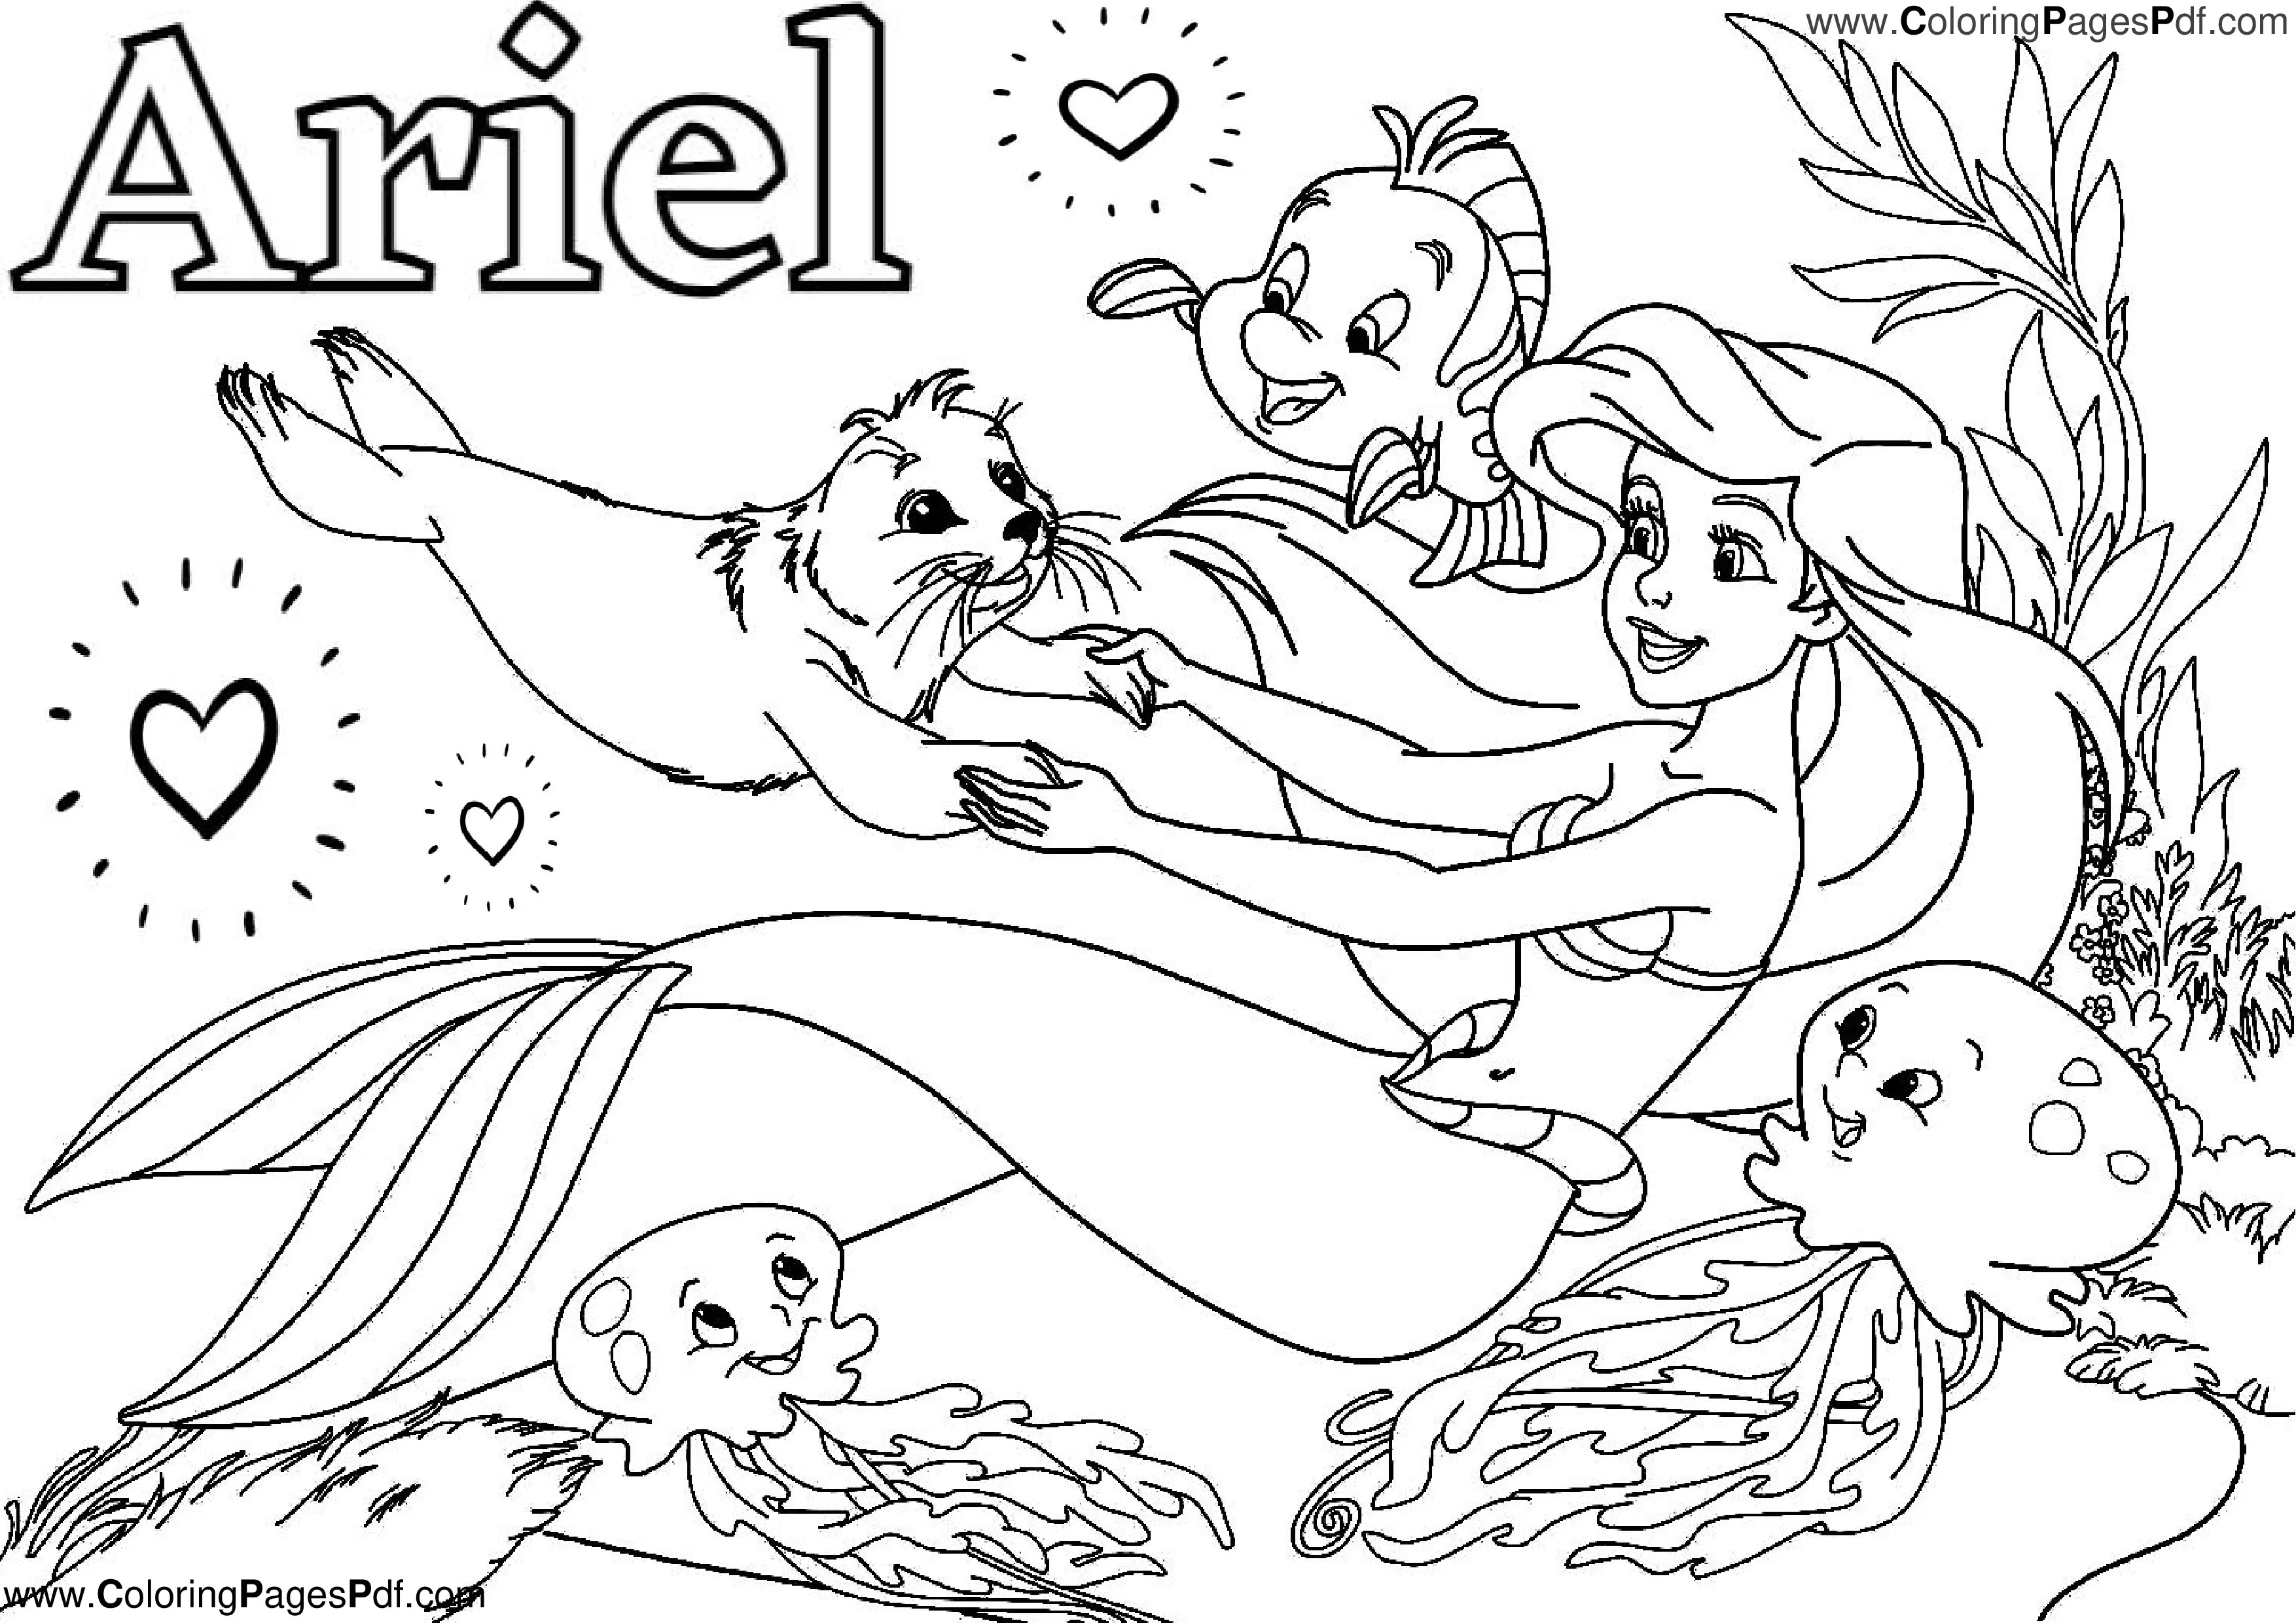 Ariel mermaid coloring pages